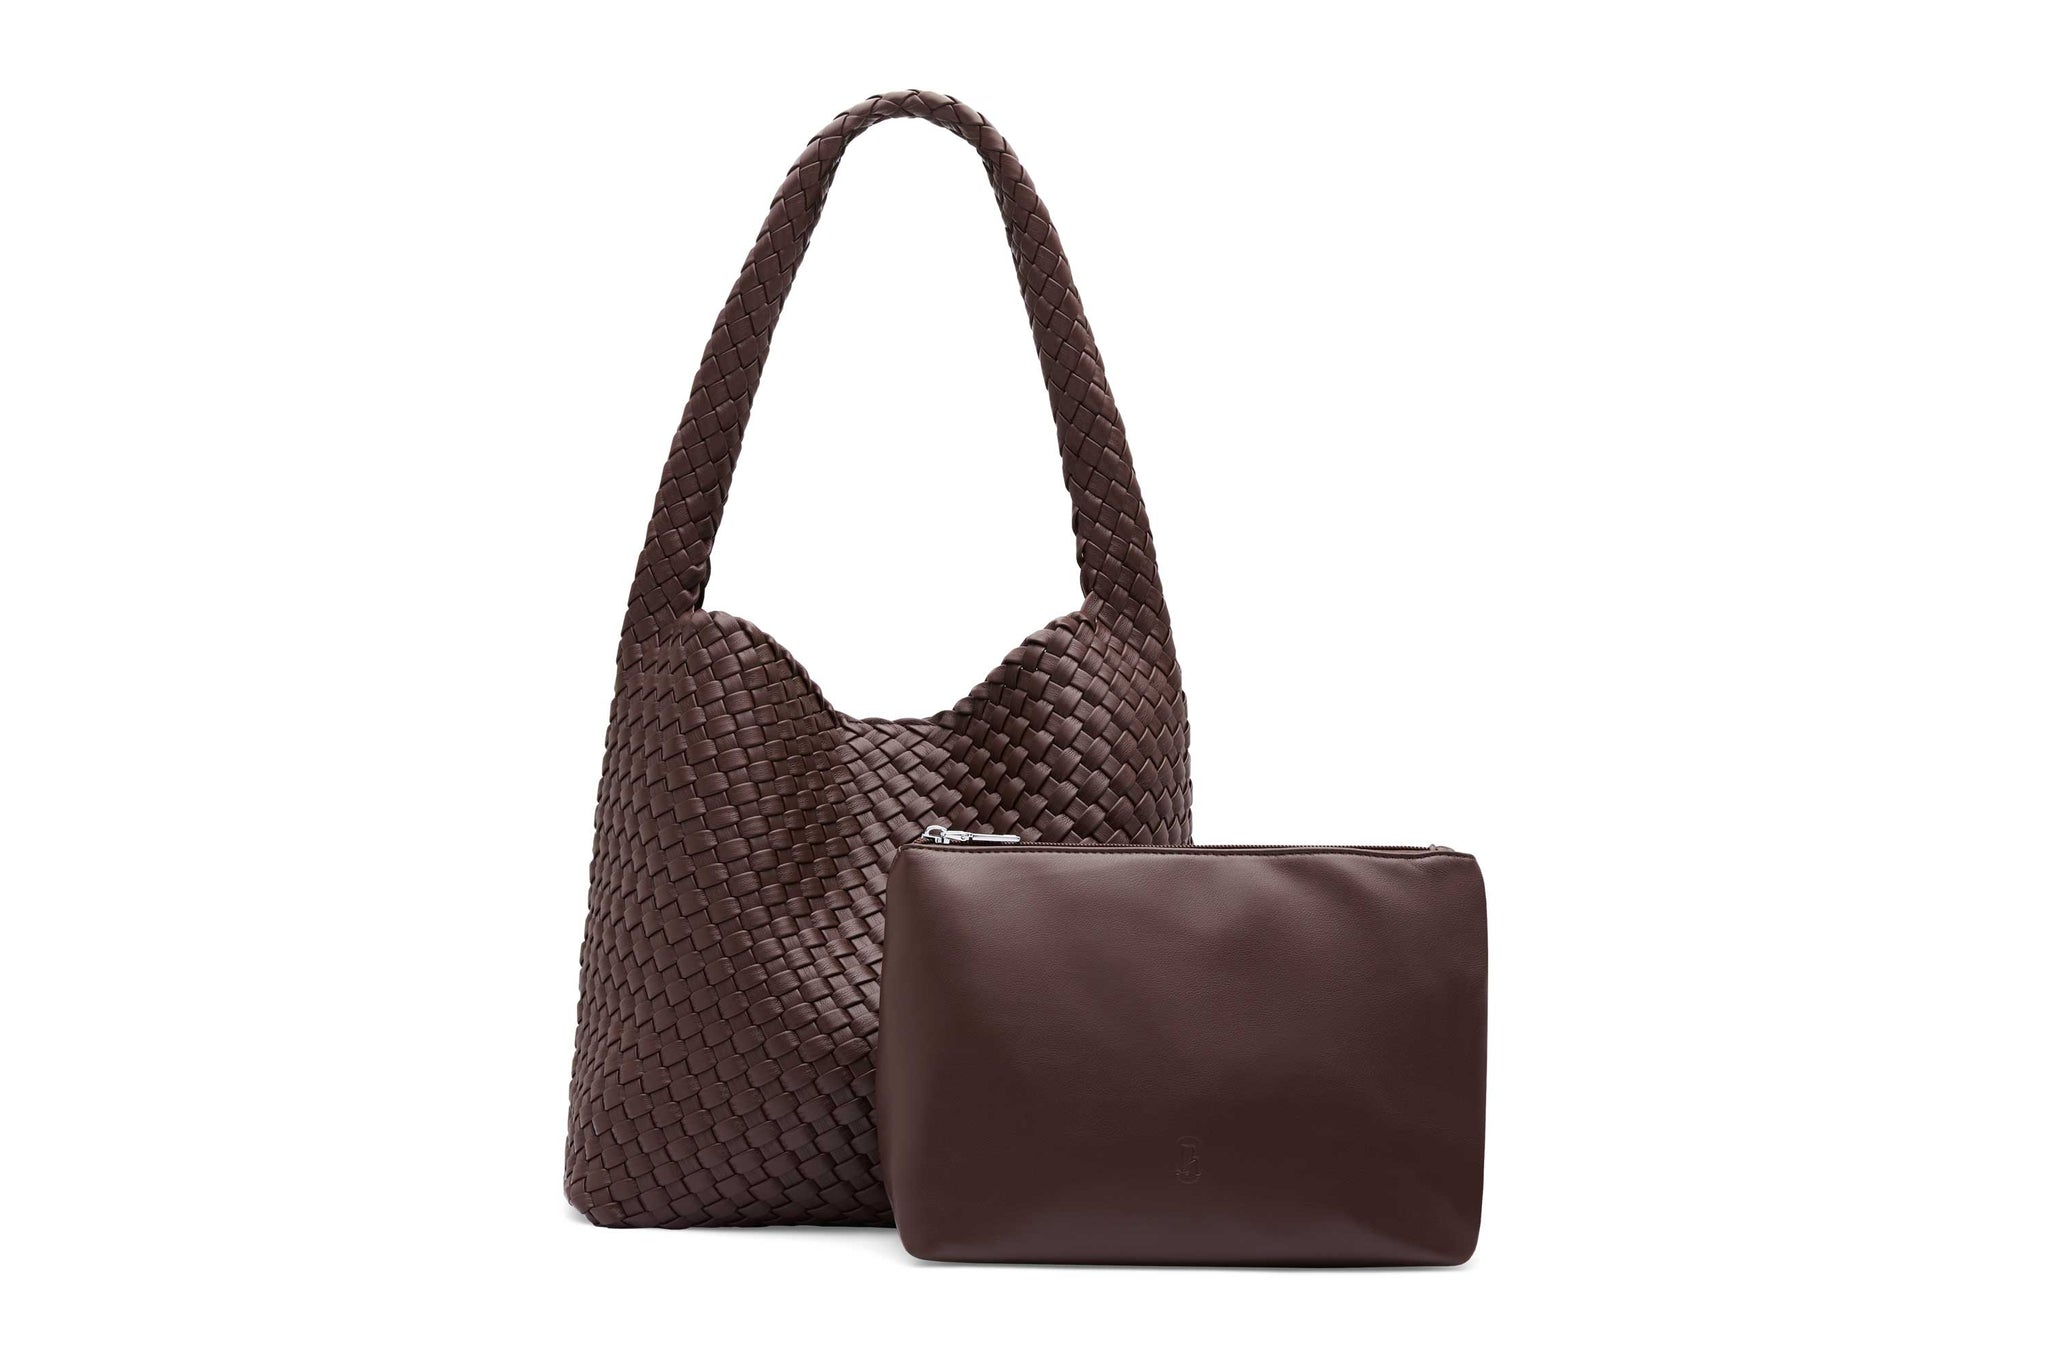 Rylan, Rylan Studio, Brown Woven Alt-Leather Large Tote Handbag